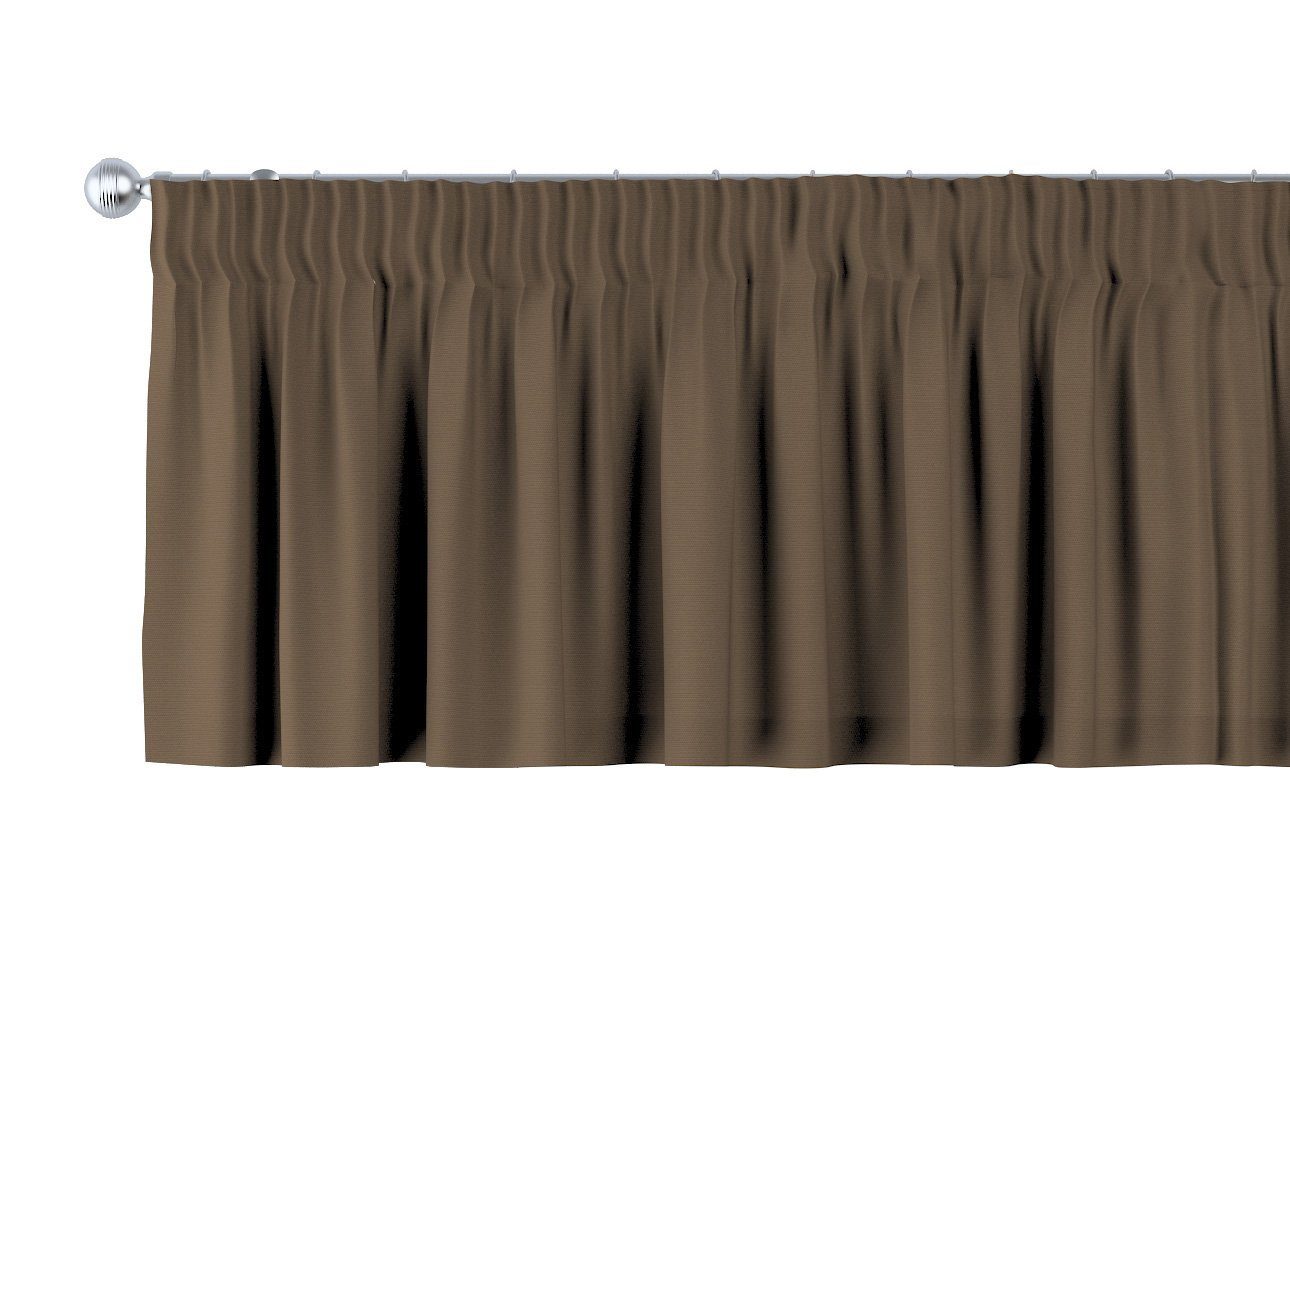 x 130 Dekoria 40 cm, Cotton mocca Vorhang Panama, Kräuselband mit